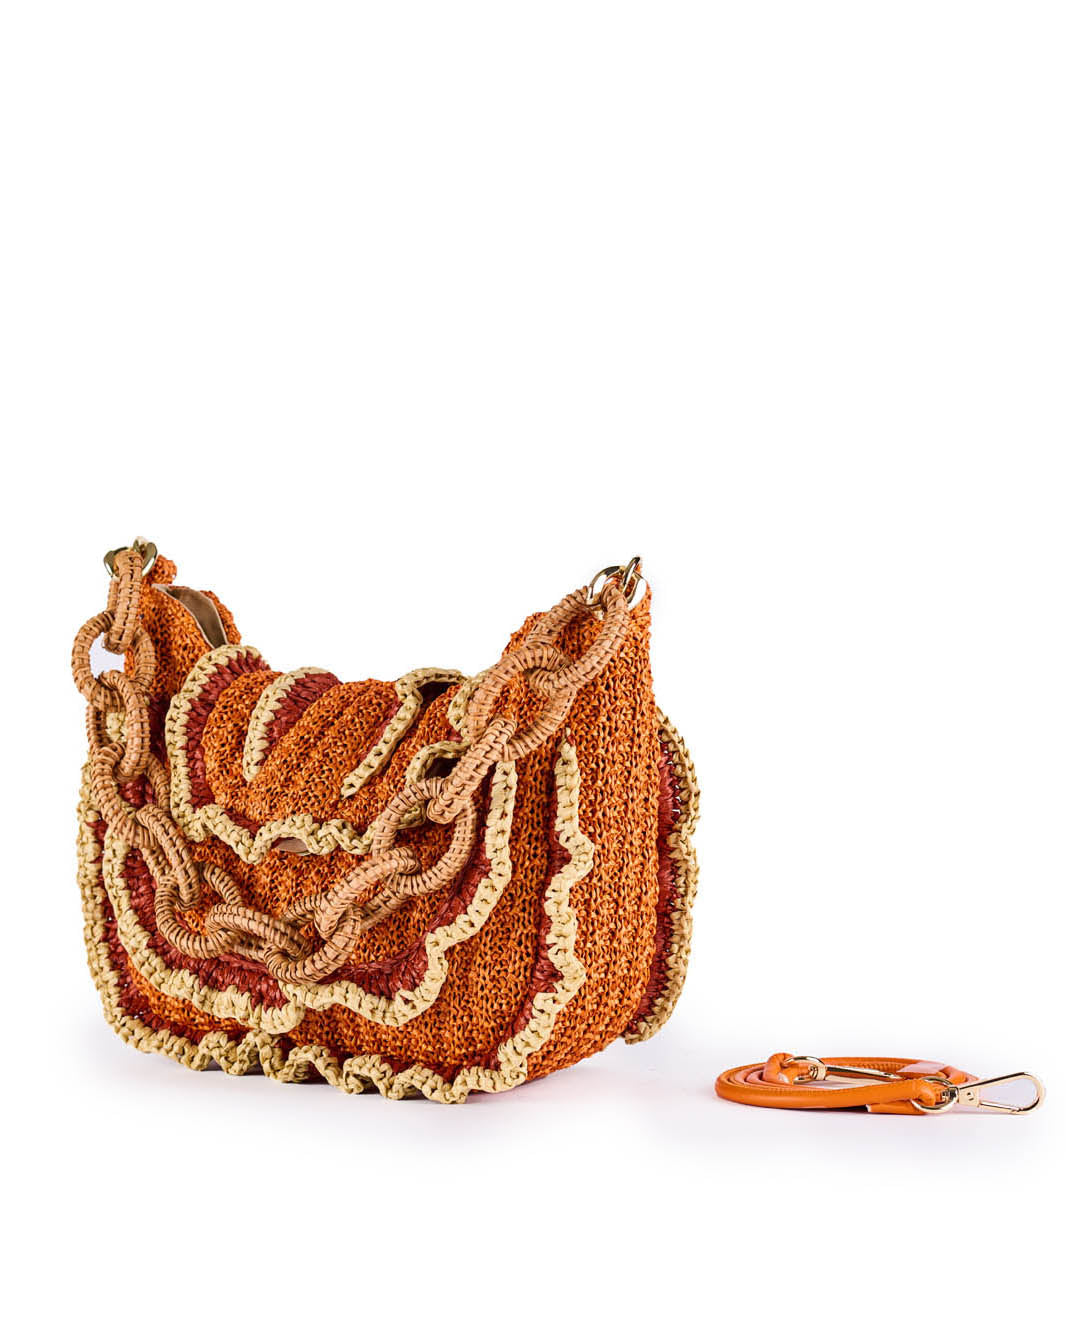 Handmade orange woven handbag with decorative chain strap and matching orange leather keychain